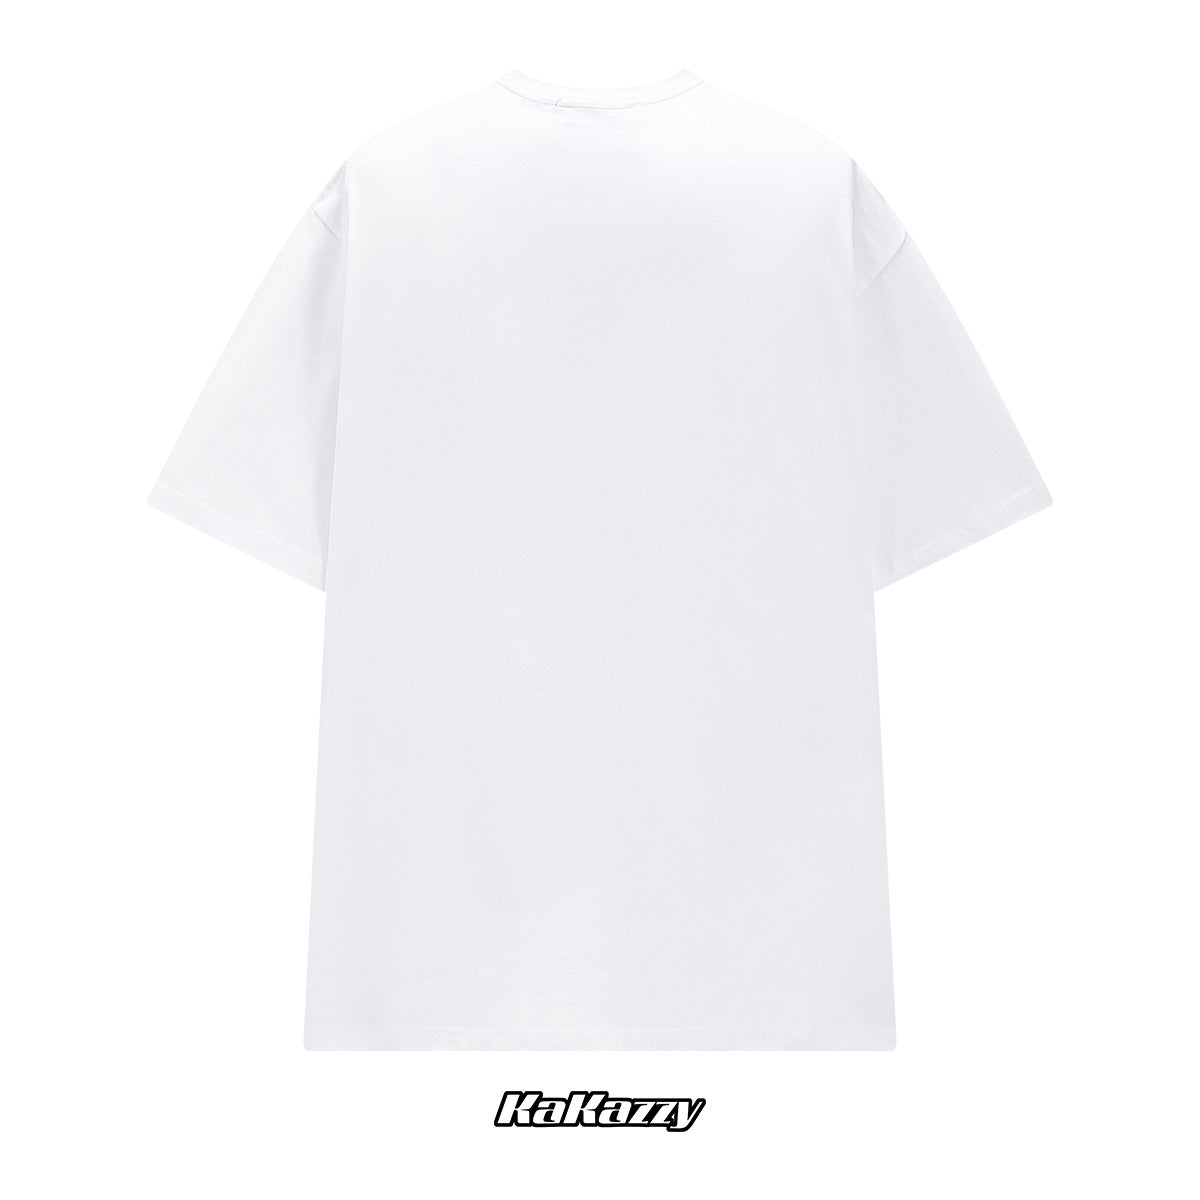 Kakazzy T-Shirt Tee Black And White